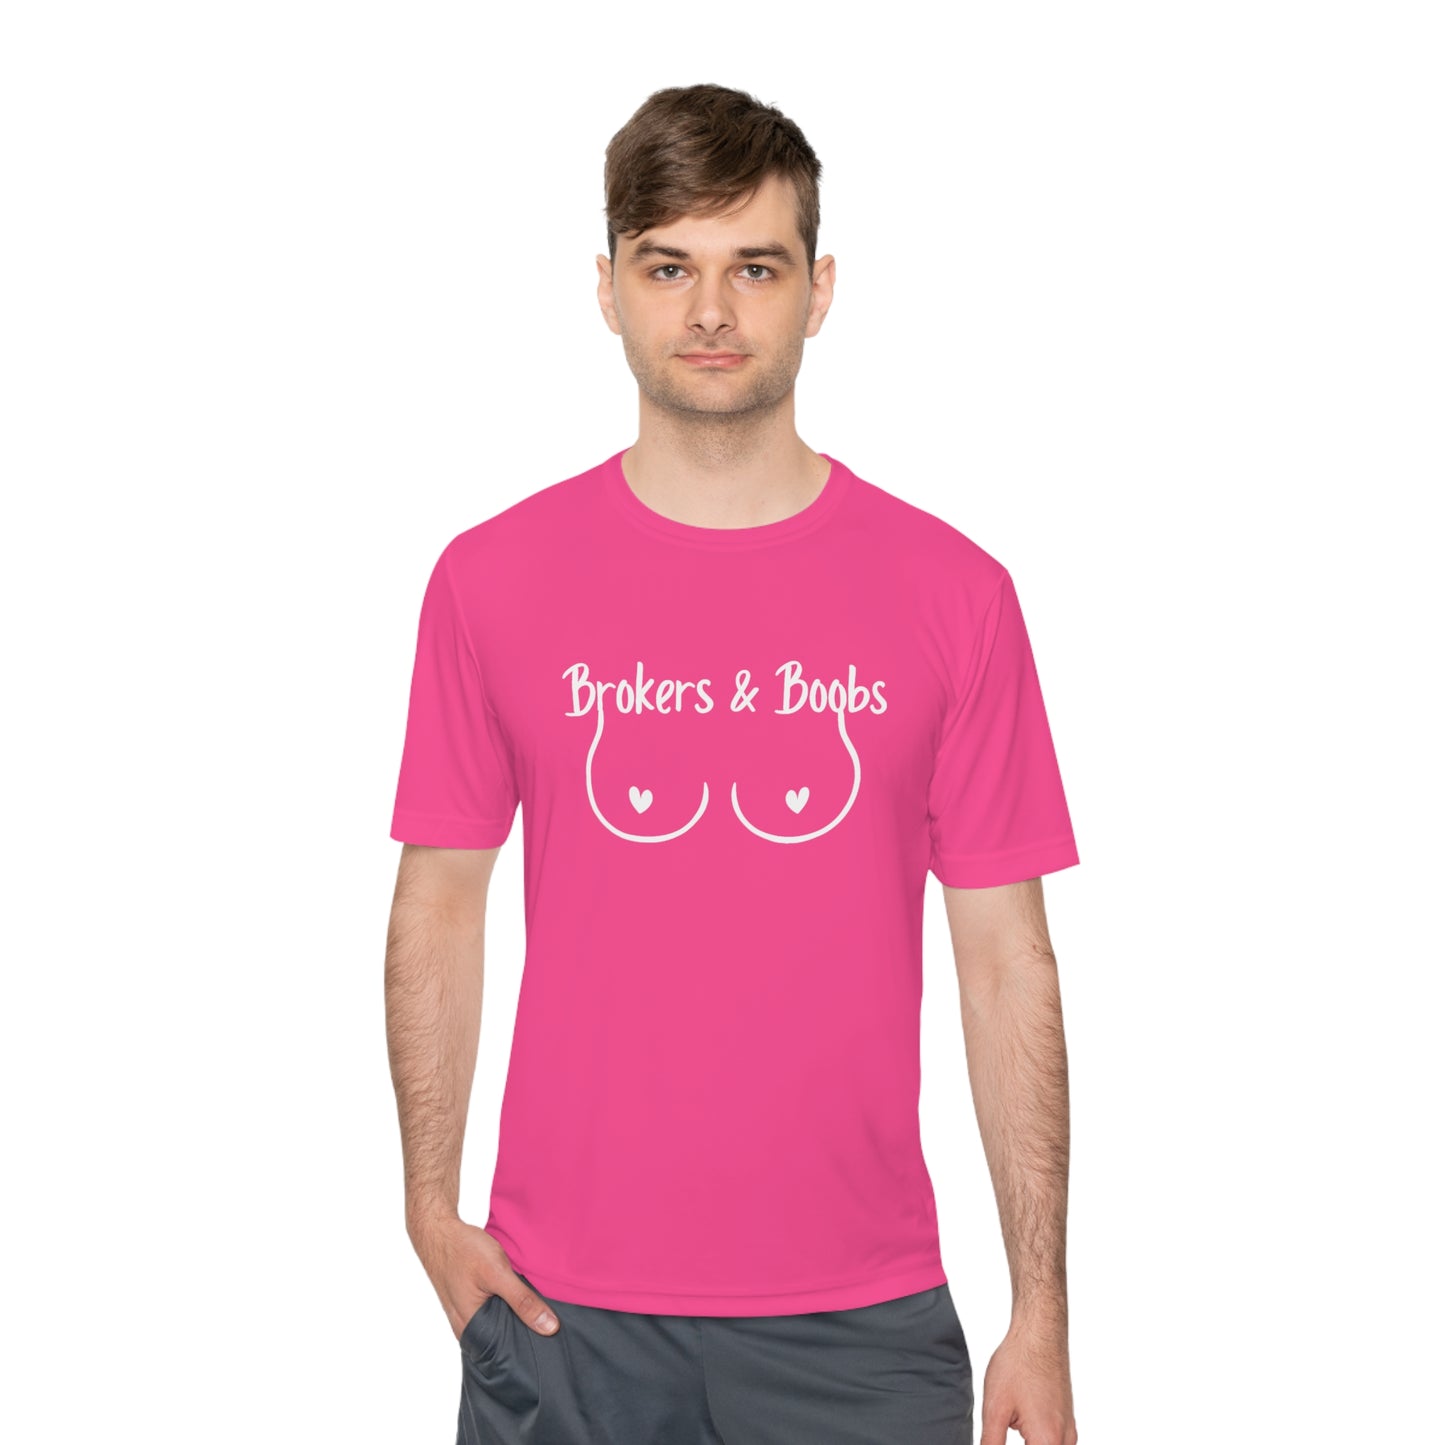 Brokers & Boobs Breast Cancer Awareness Tshirt